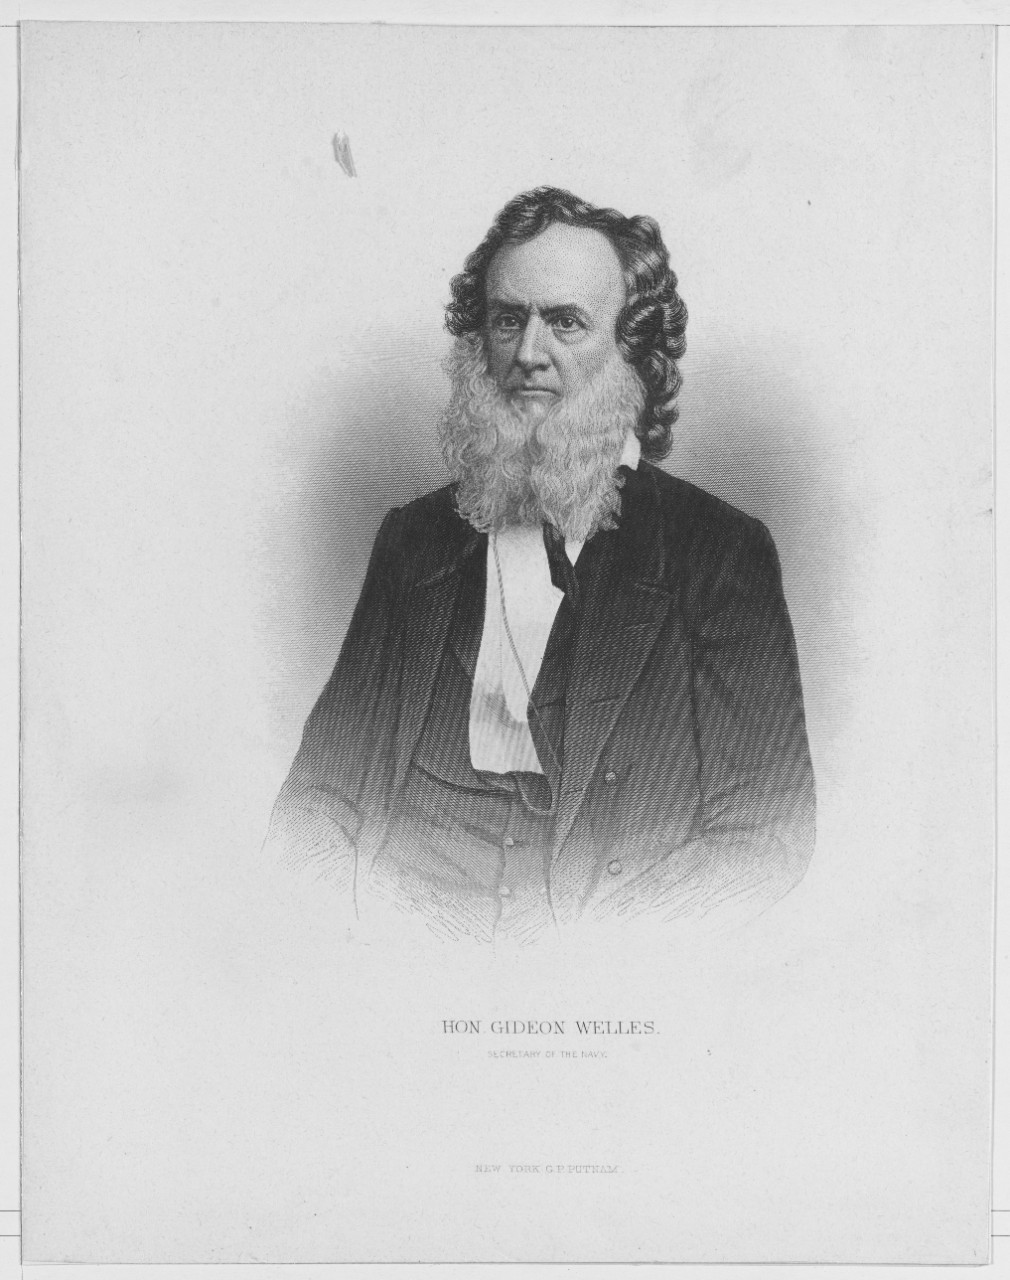 Gideon Welles, Secretary of the Navy, 1861-1869